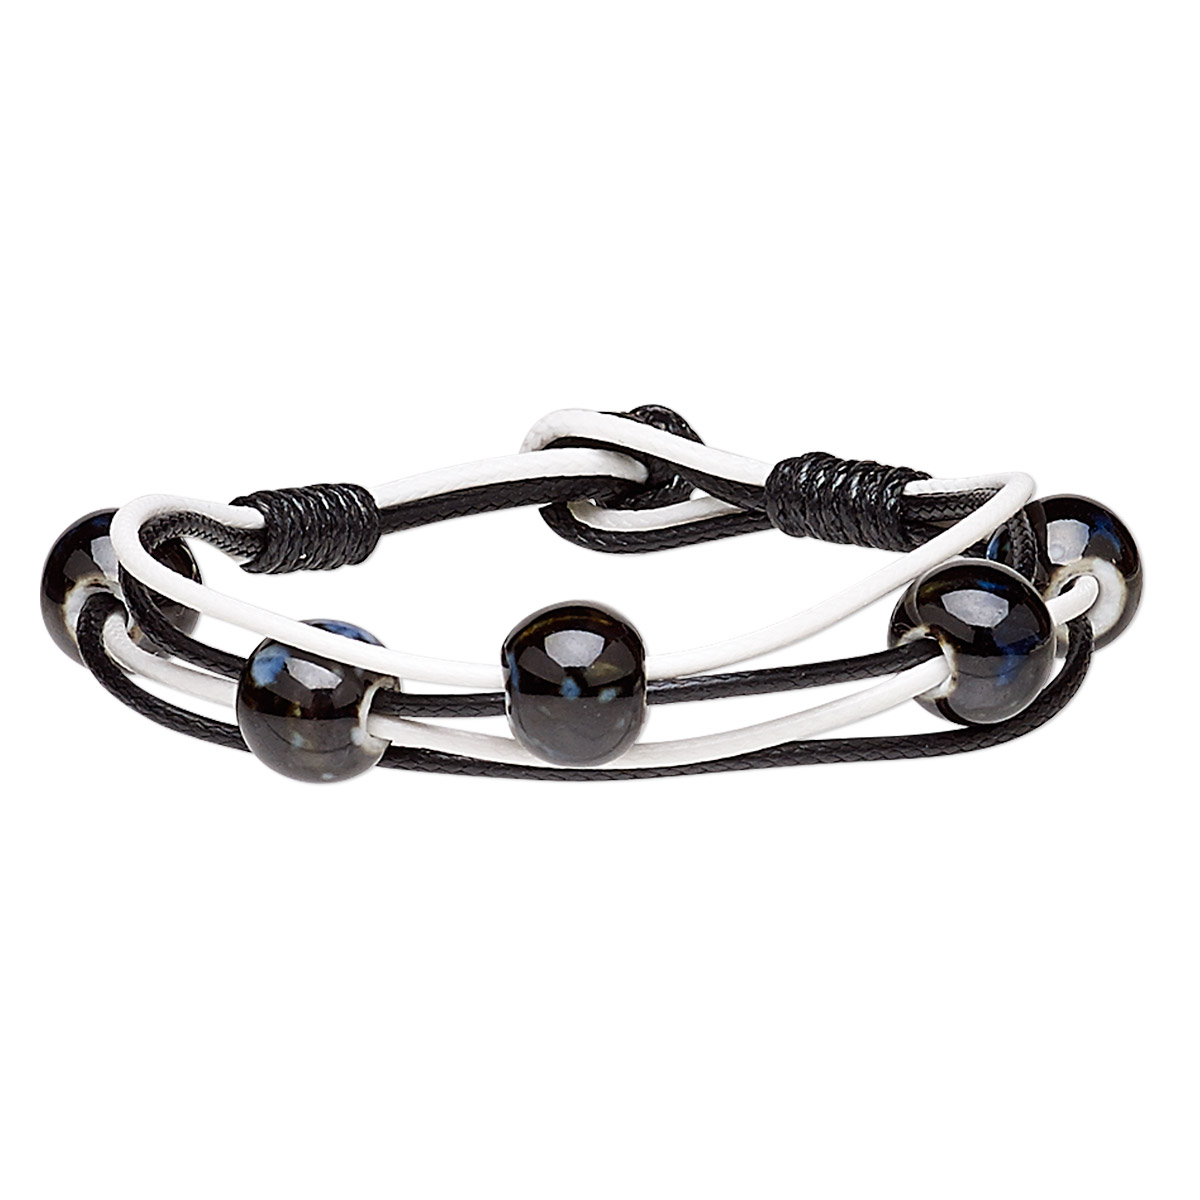 Bracelet, porcelain and waxed cotton cord, black / white / blue, 13mm ...